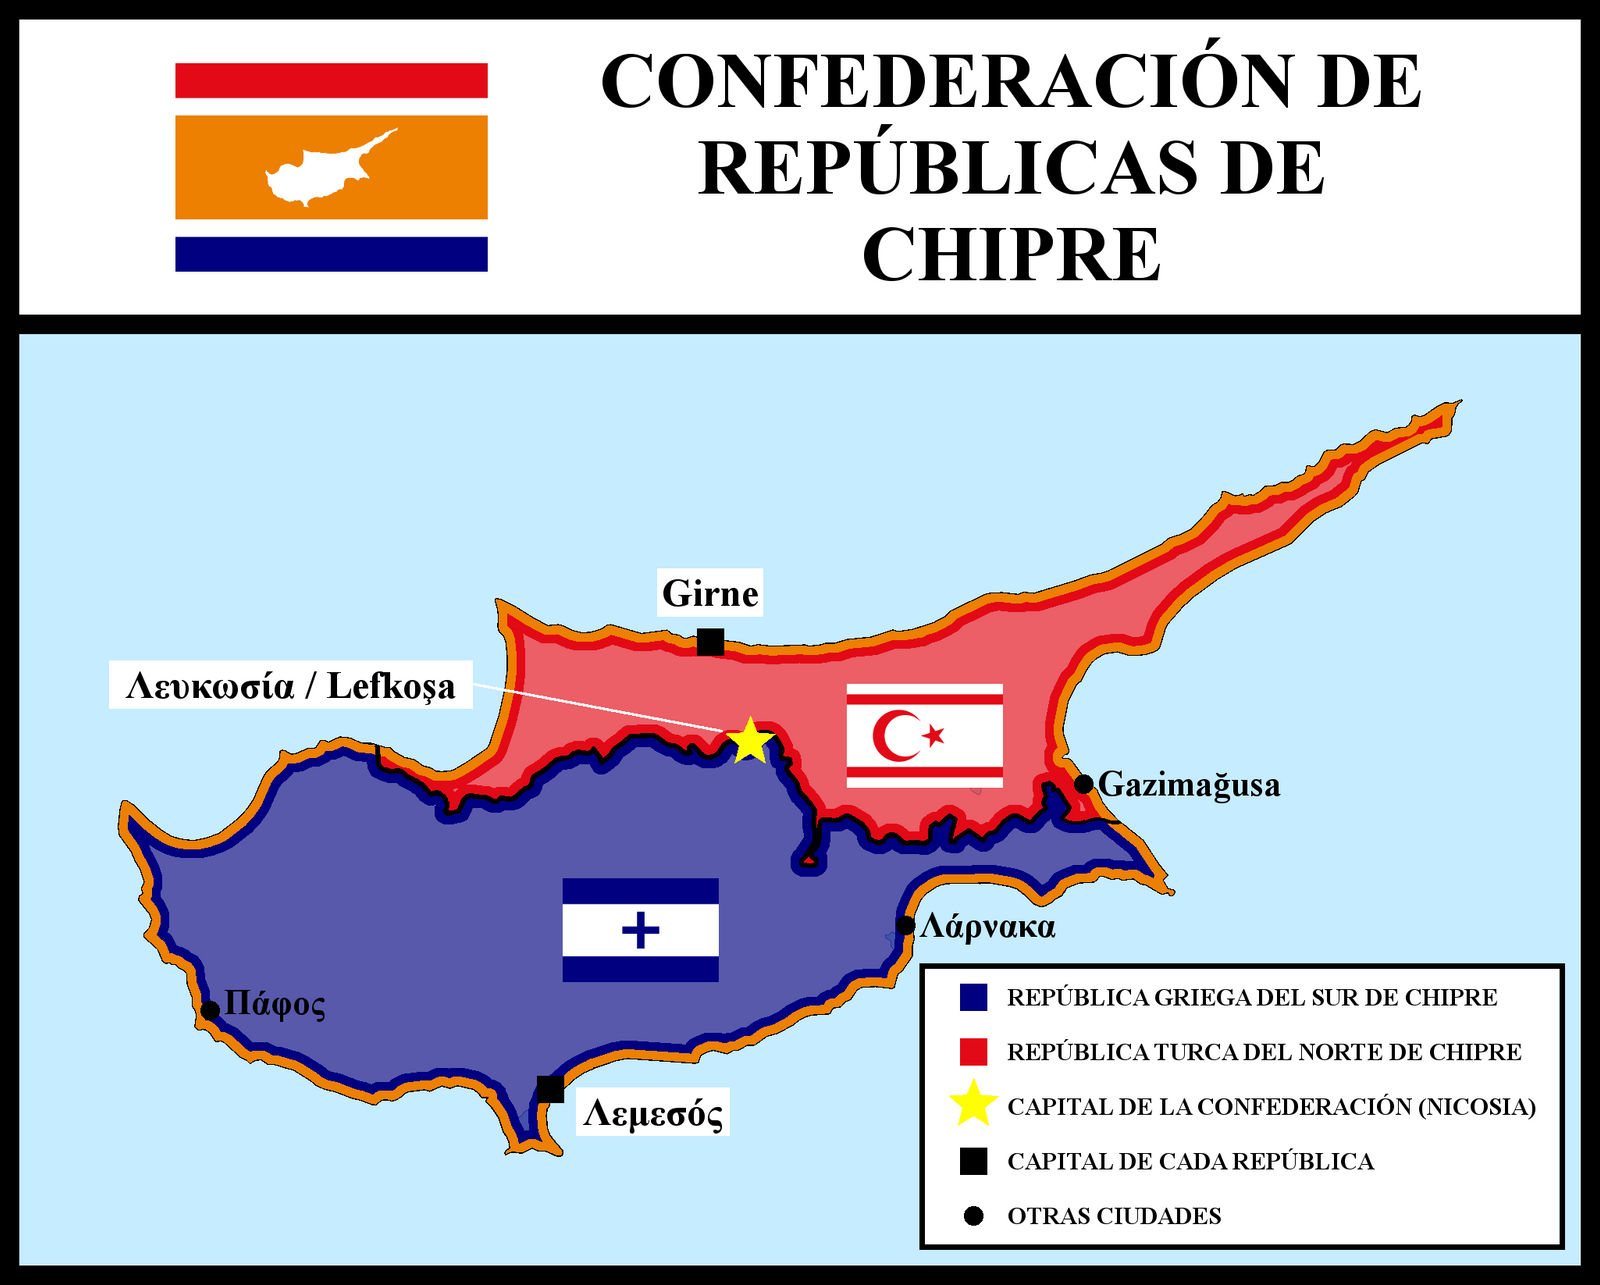 Confederation of Republics of Cyprus by matritum on DeviantArt